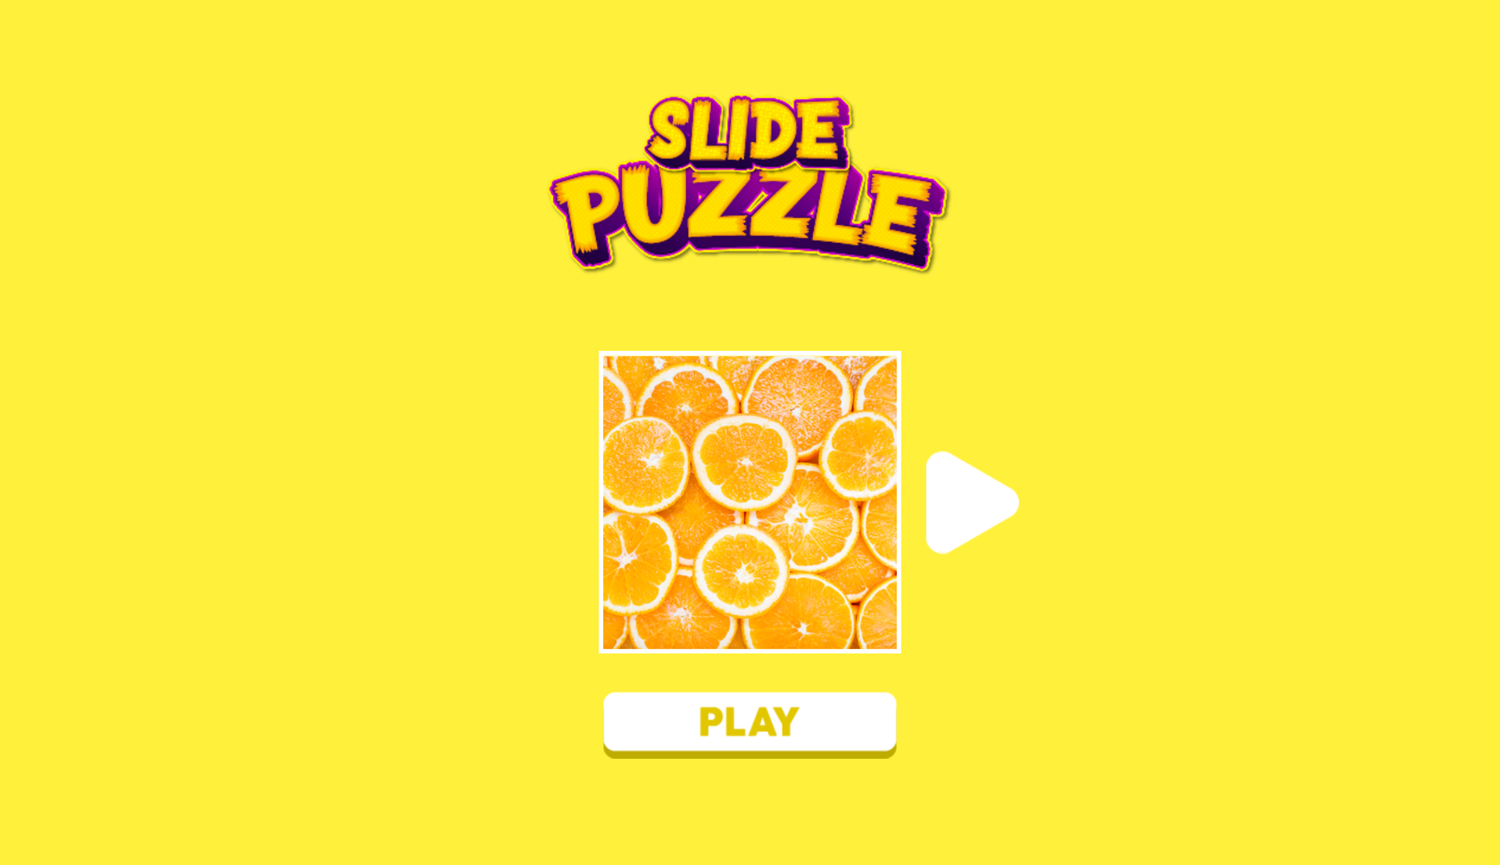 Slide Puzzle Game Welcome Screen Screenshot.